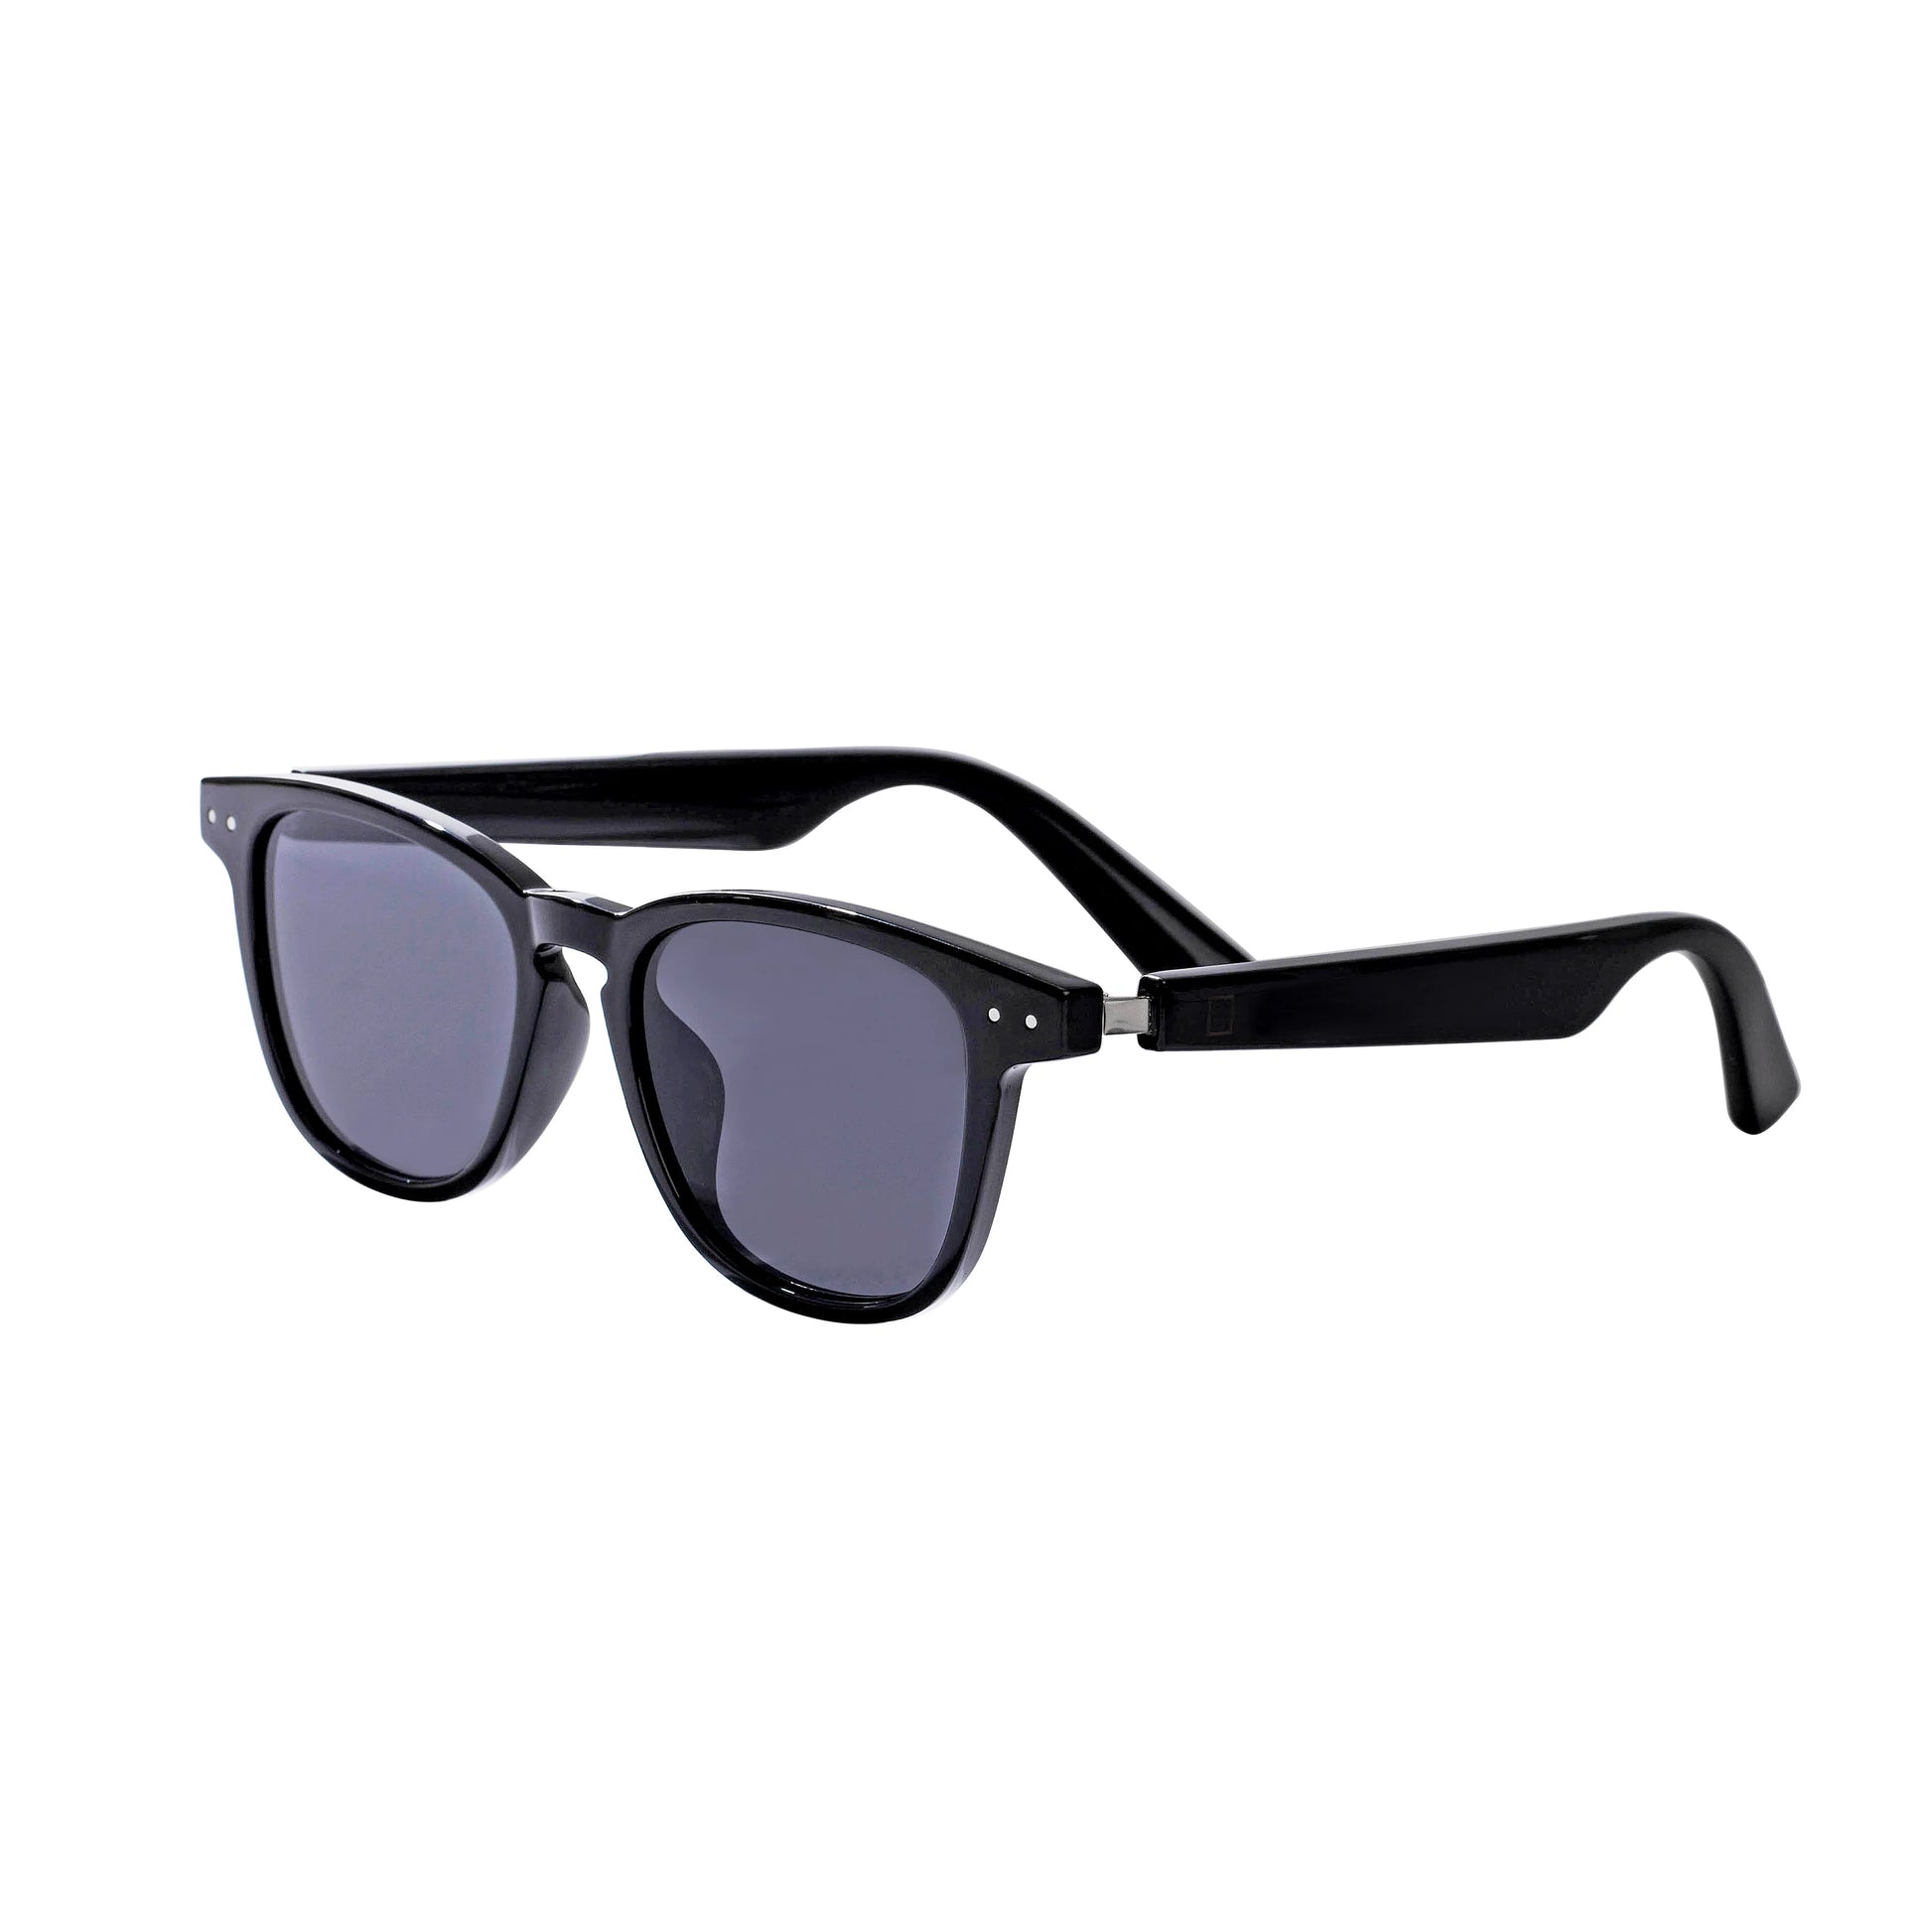 Fashion Bluetooth Eyeglasses: Trendy Polarized Smart Sunglasses with Music Audio